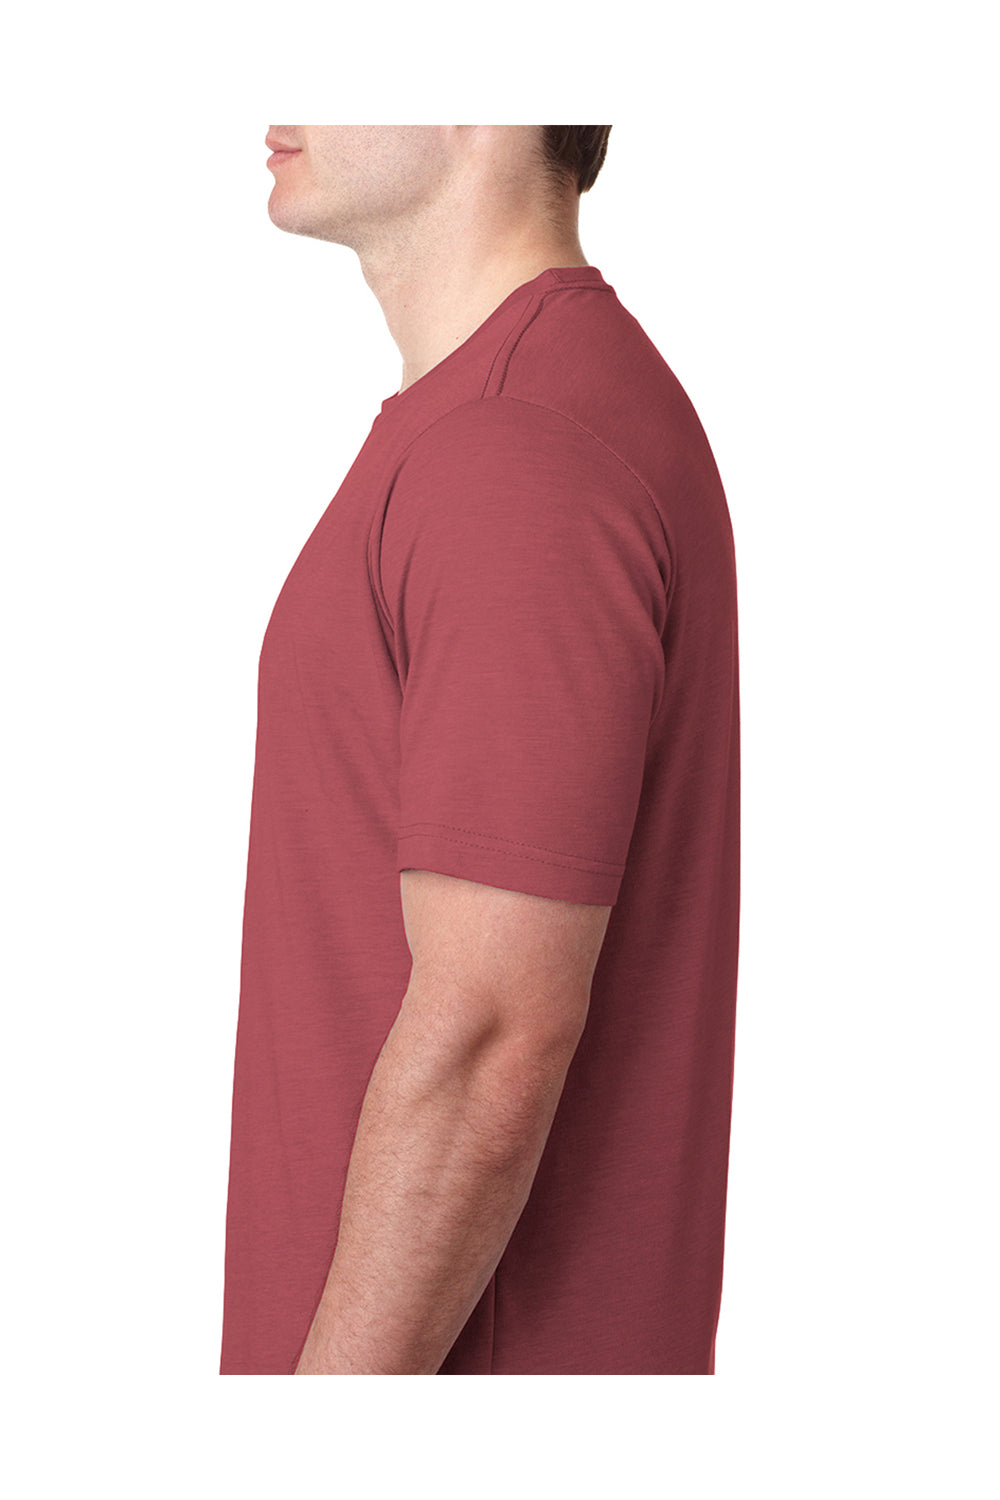 Next Level 6200 Mens Jersey Short Sleeve Crewneck T-Shirt Paprika Red Side